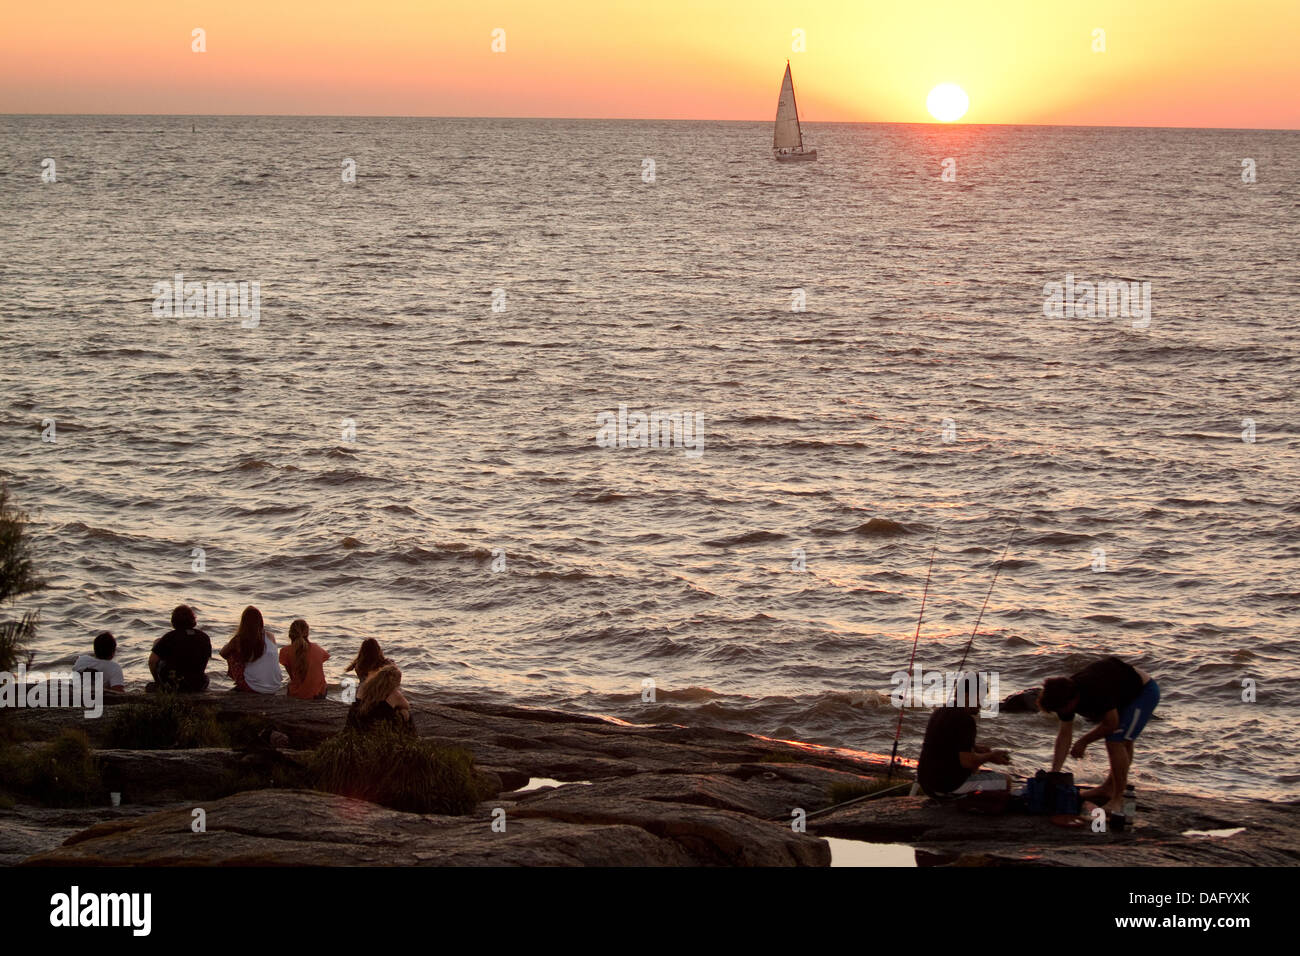 People watching the sunset over the Rio de la Plata from the shore in Colonia del Sacramento, Uruguay Stock Photo